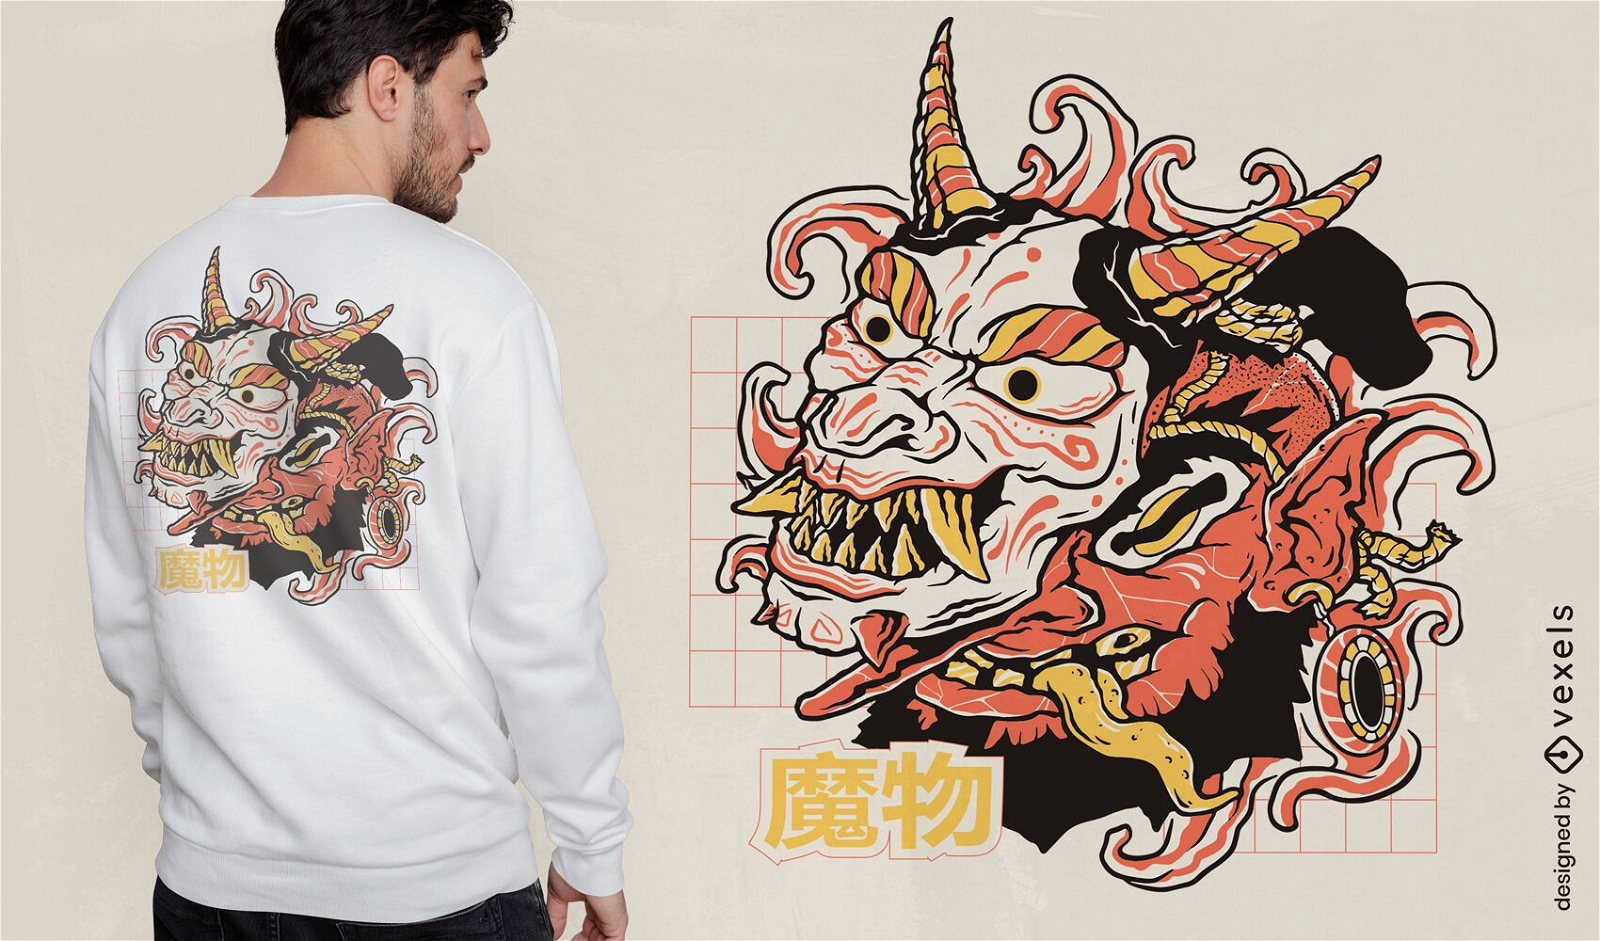 Oni-Monster asiatisches Masken-T-Shirt-Design